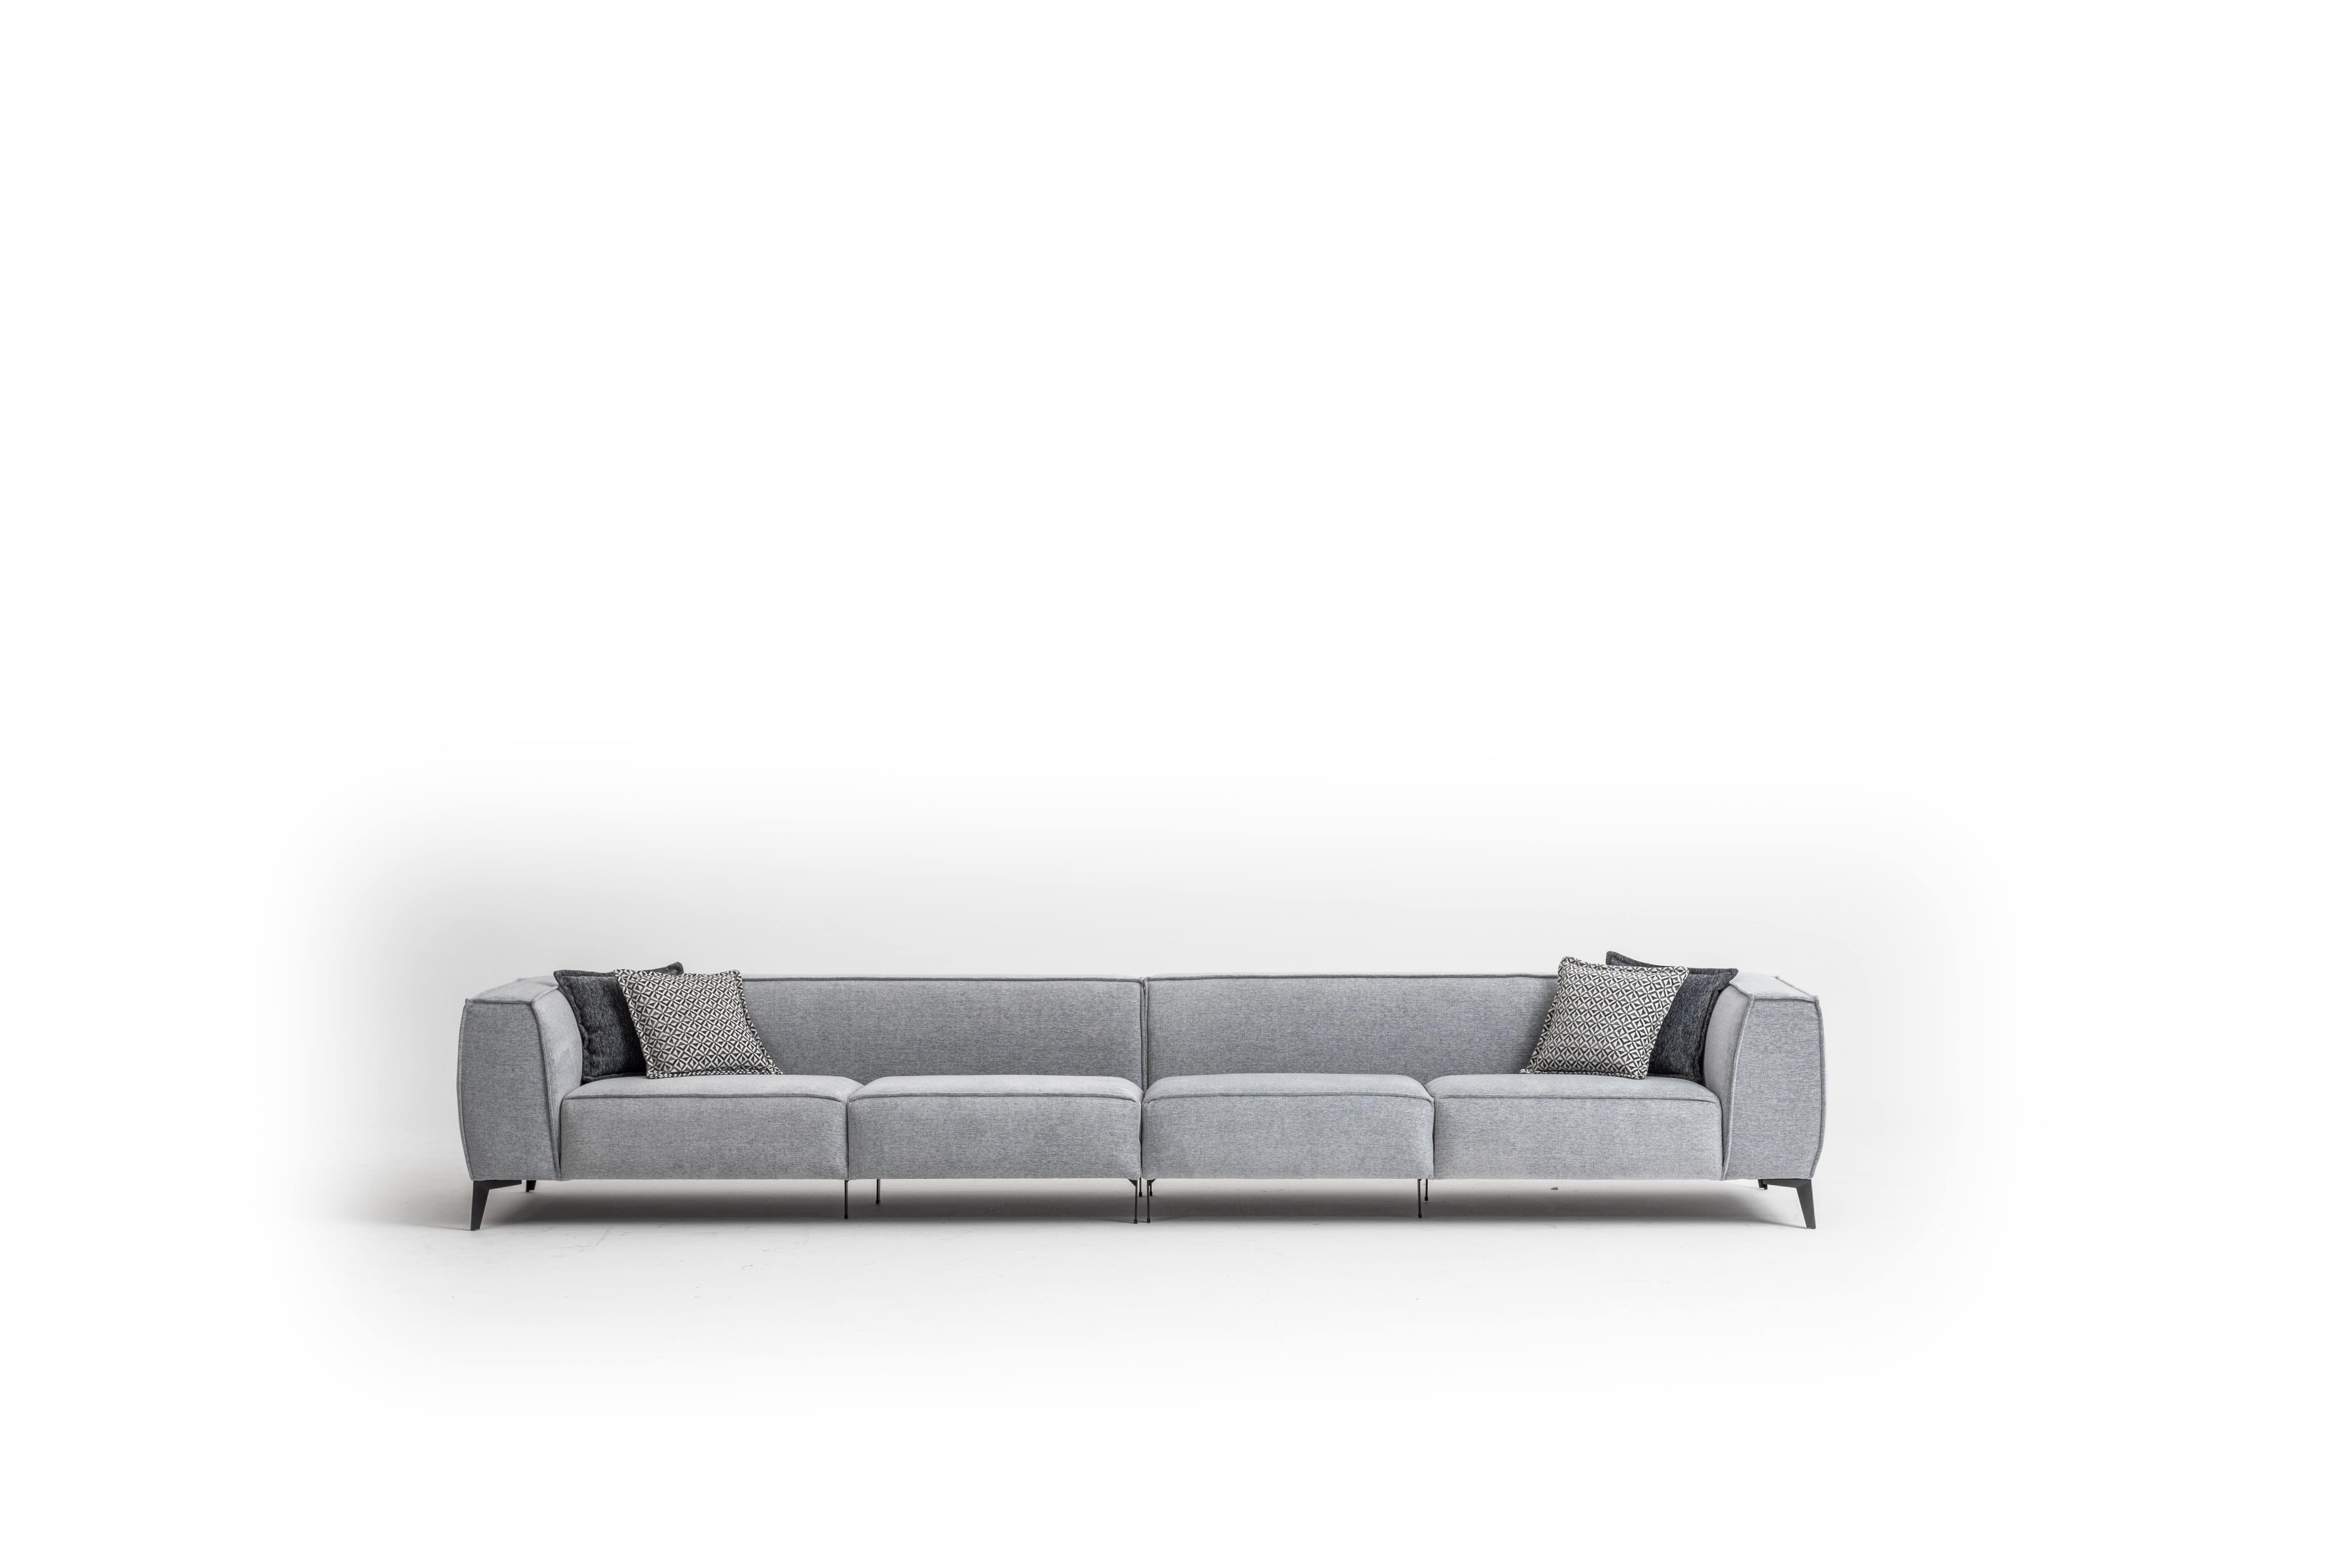 420cm, Modern Big-Sofa Sofas Wohnzimmer Modern JVmoebel in Made Europe Sitzer 6 Sofa Textilsofa